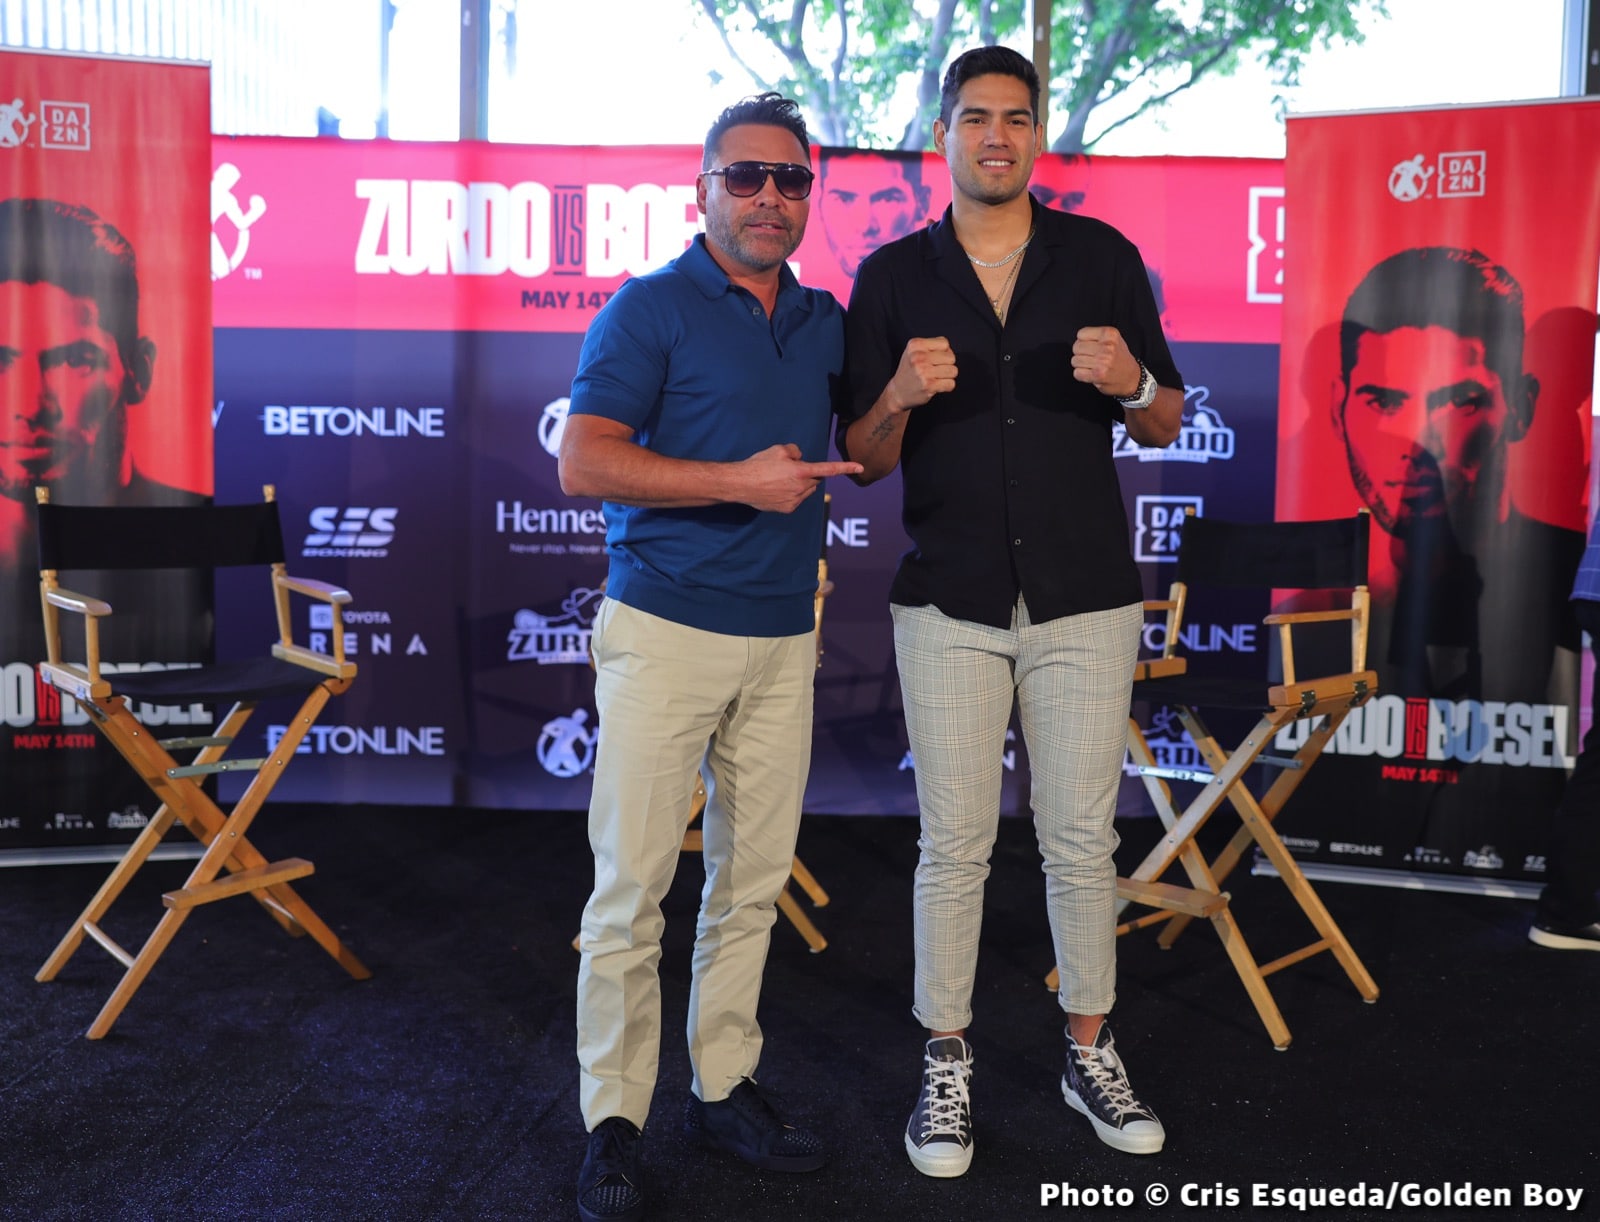 Gilberto Ramirez boxing image / photo